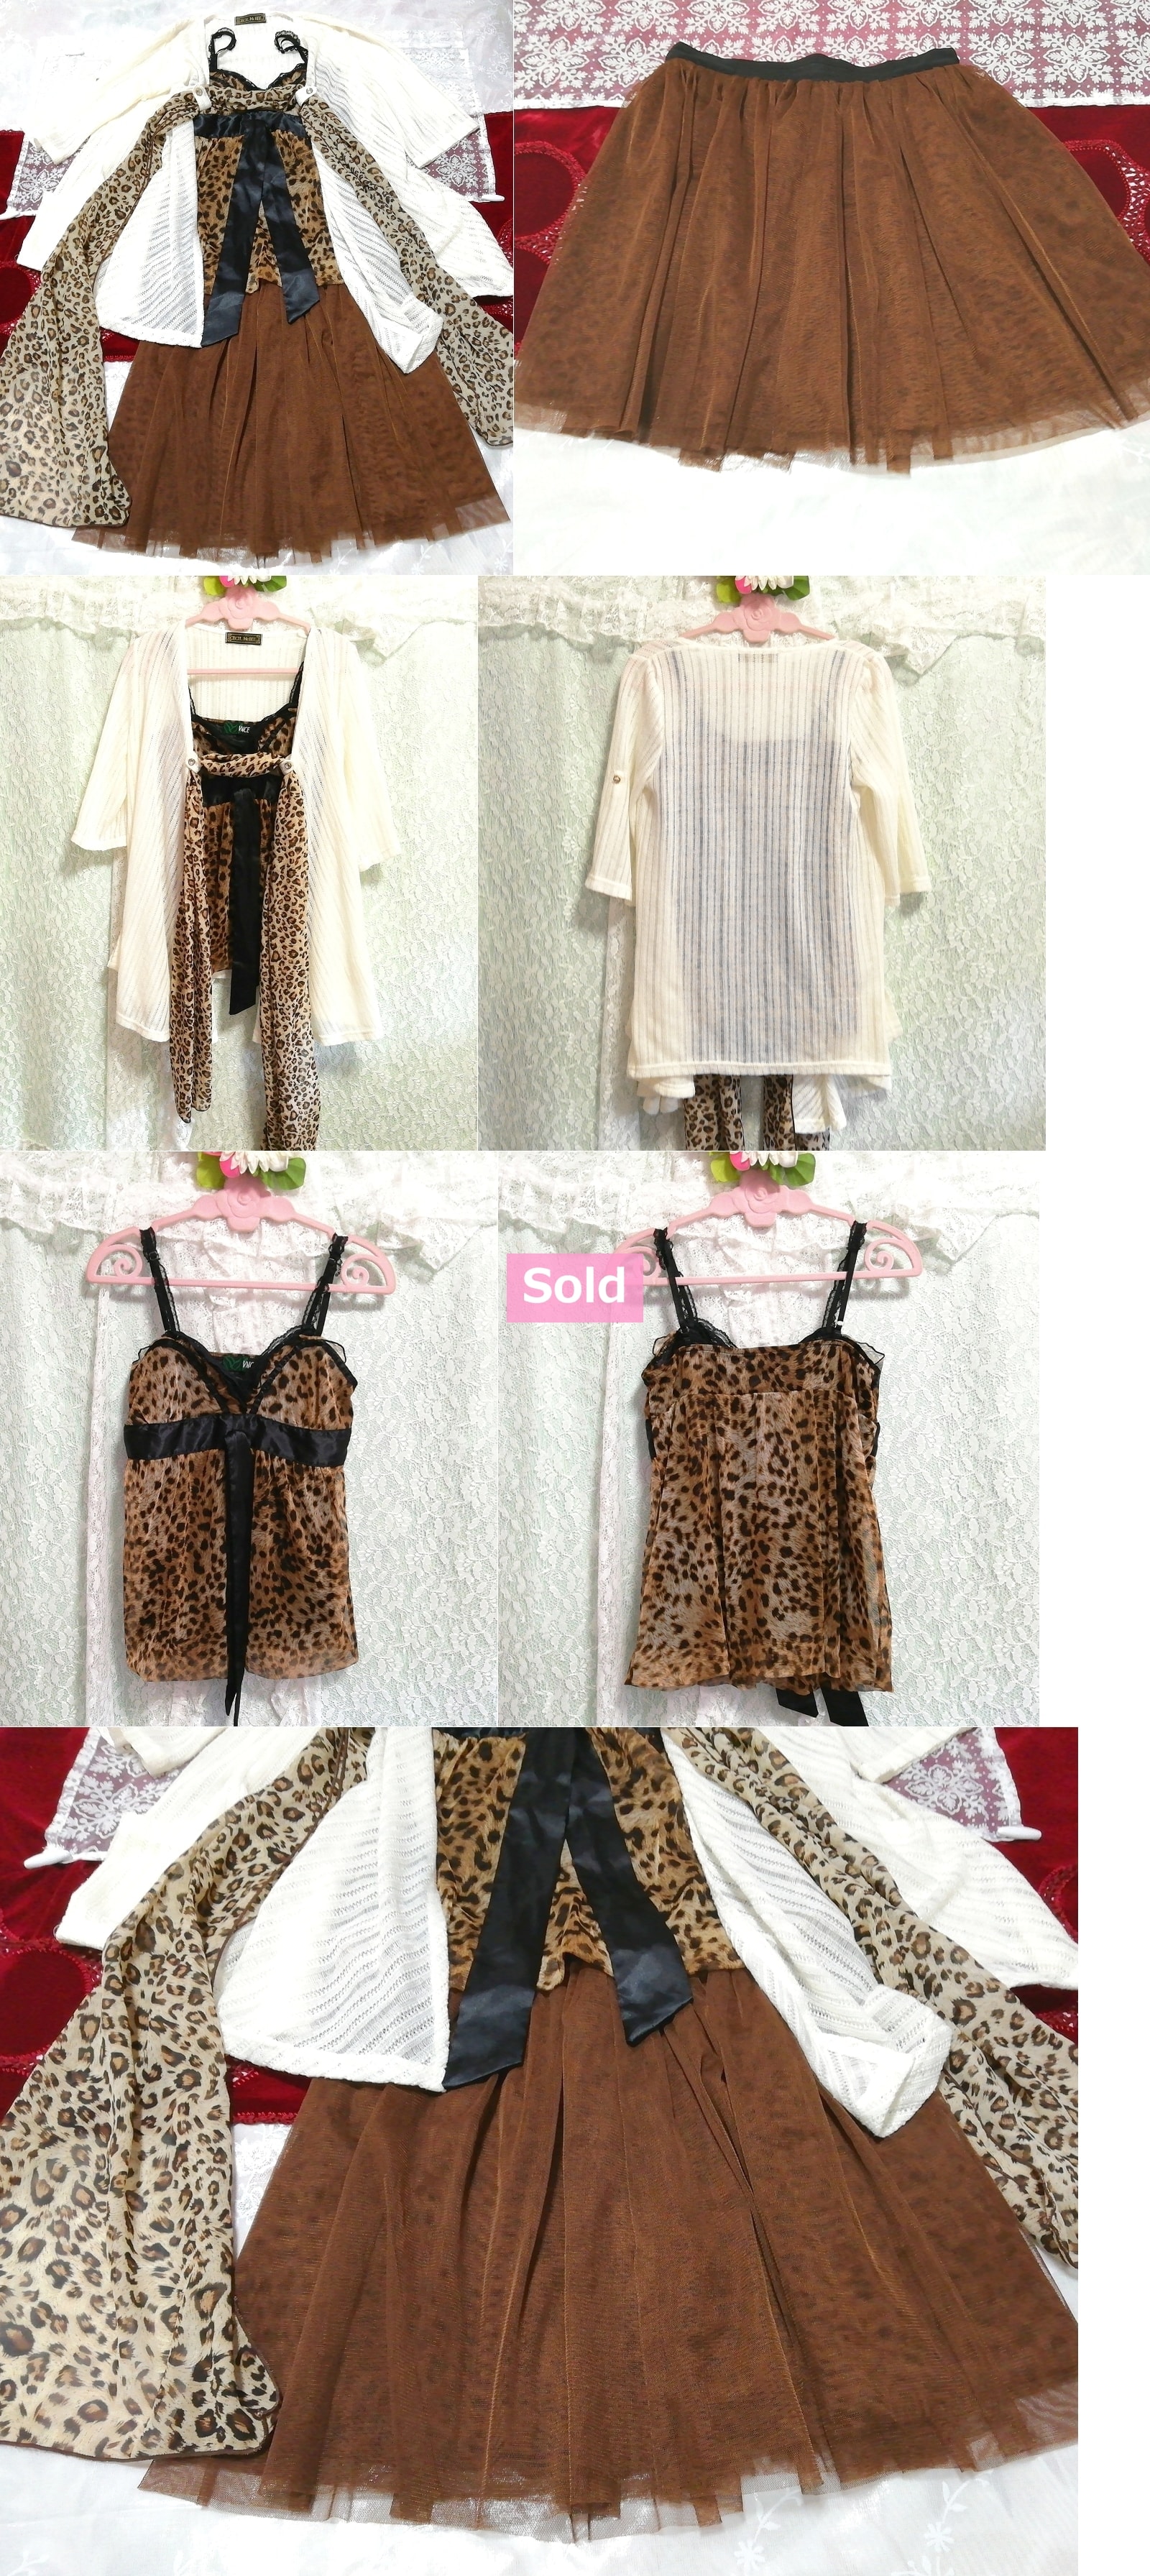 Cardigan blanc imprimé léopard, camisole marron, mini-jupe en tulle, chemise de nuit négligée, mode, mode féminine, vêtement de nuit, pyjamas